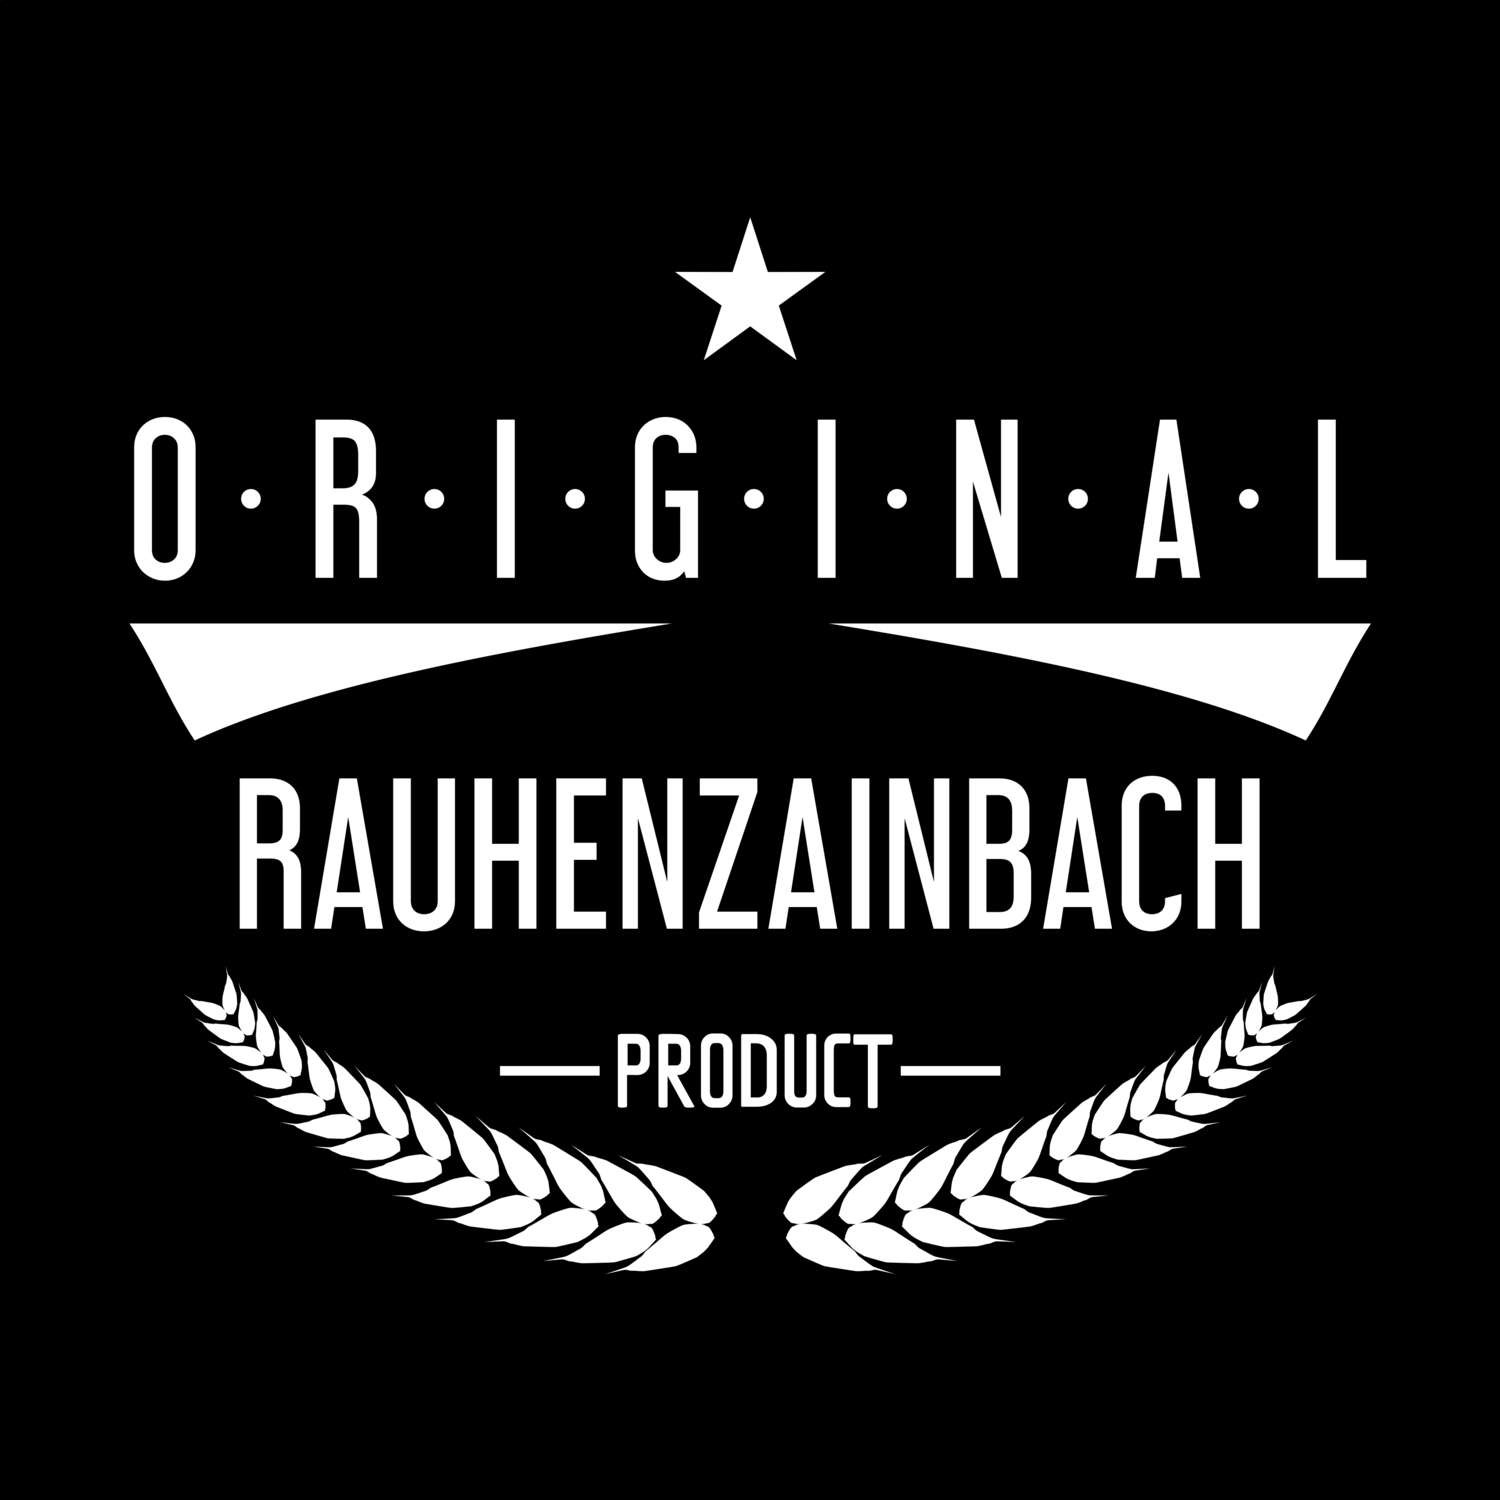 Rauhenzainbach T-Shirt »Original Product«